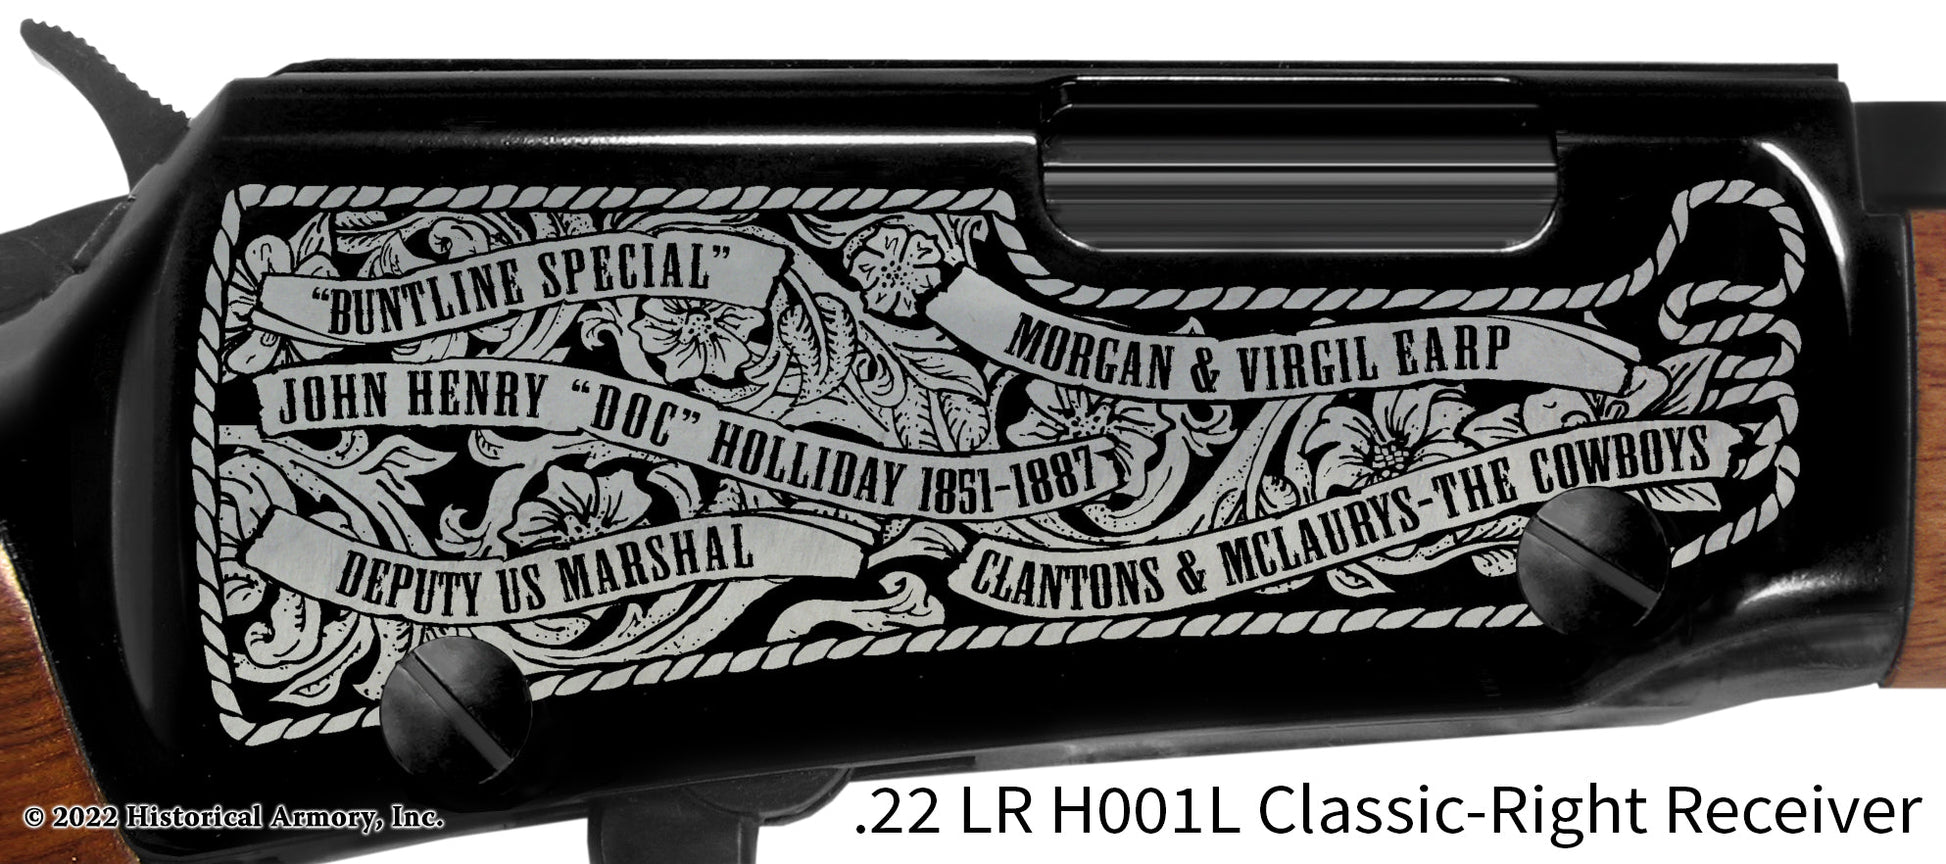 Wyatt Earp Limited Edition Engraved Rifle